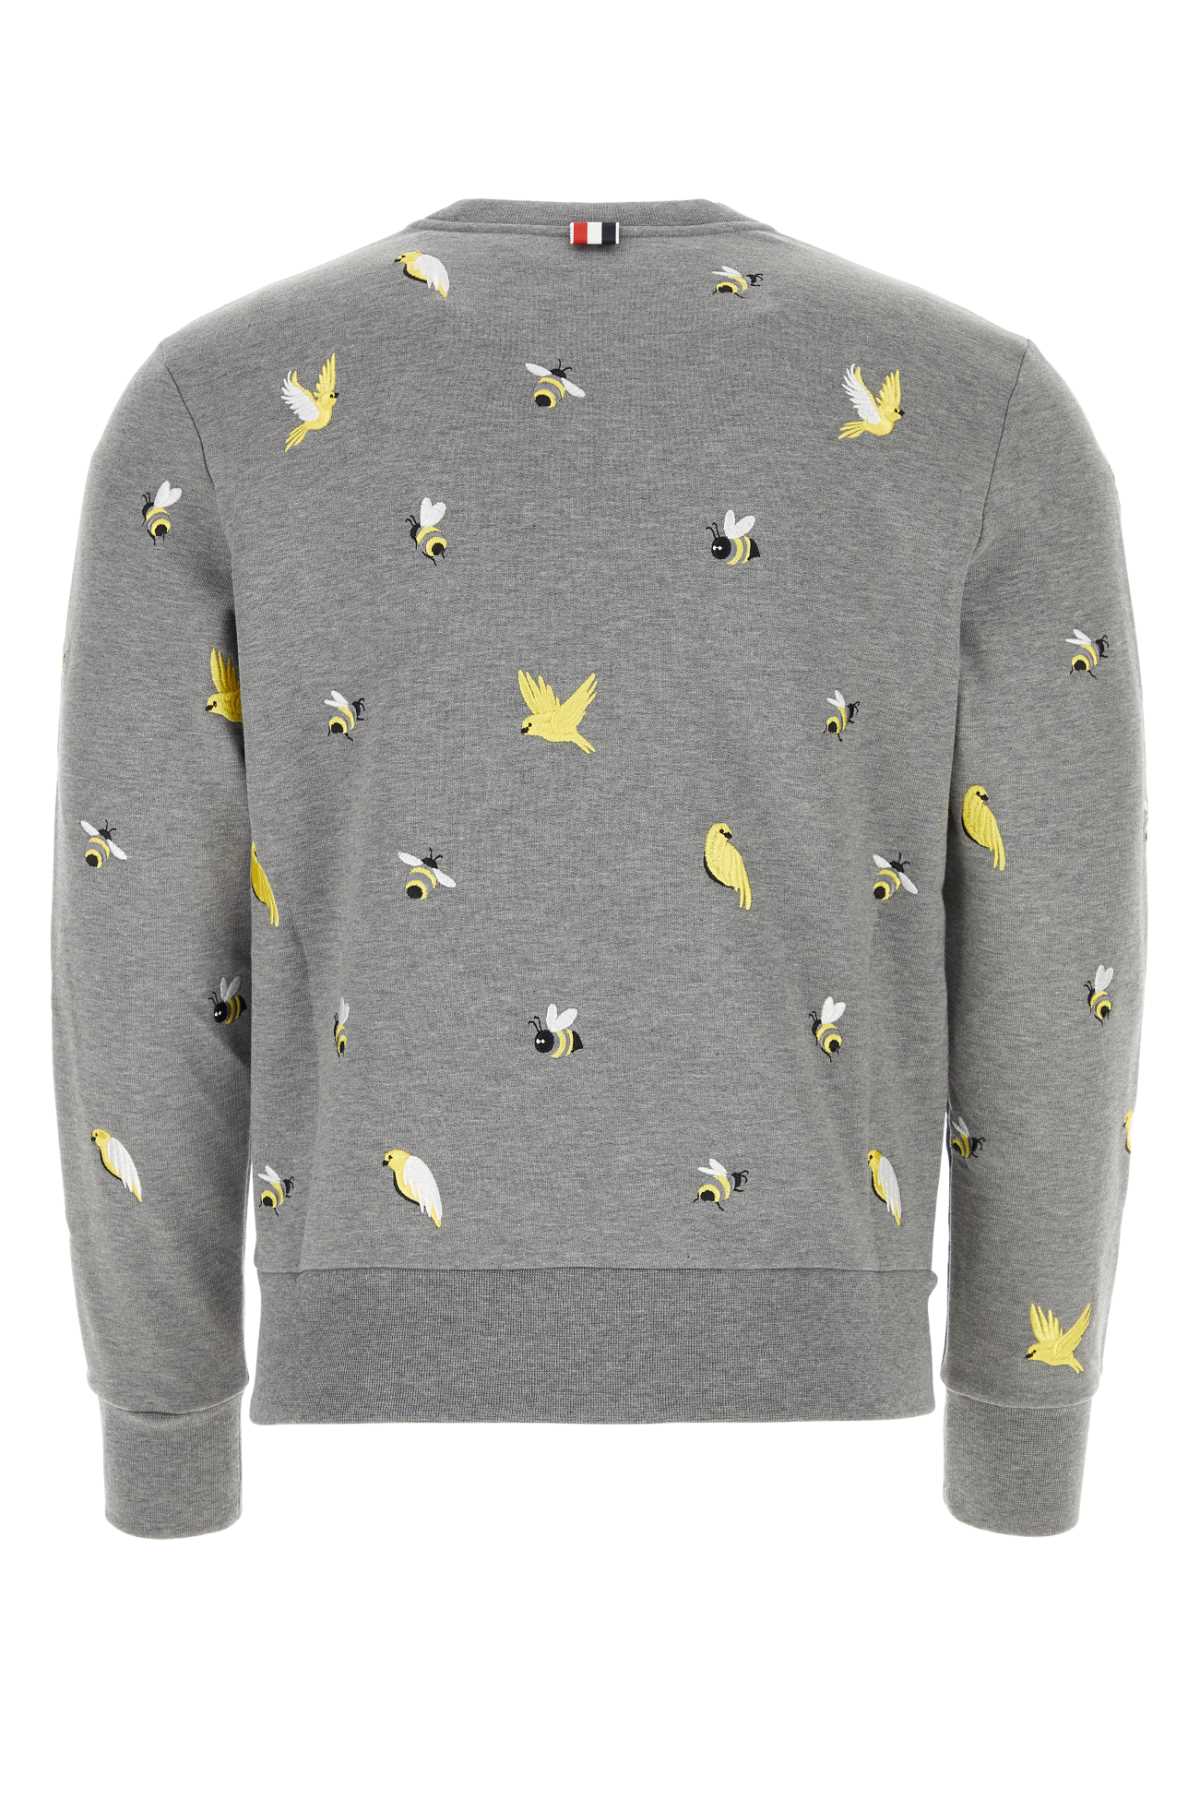 Thom Browne Grey Cotton Sweatshirt In 035